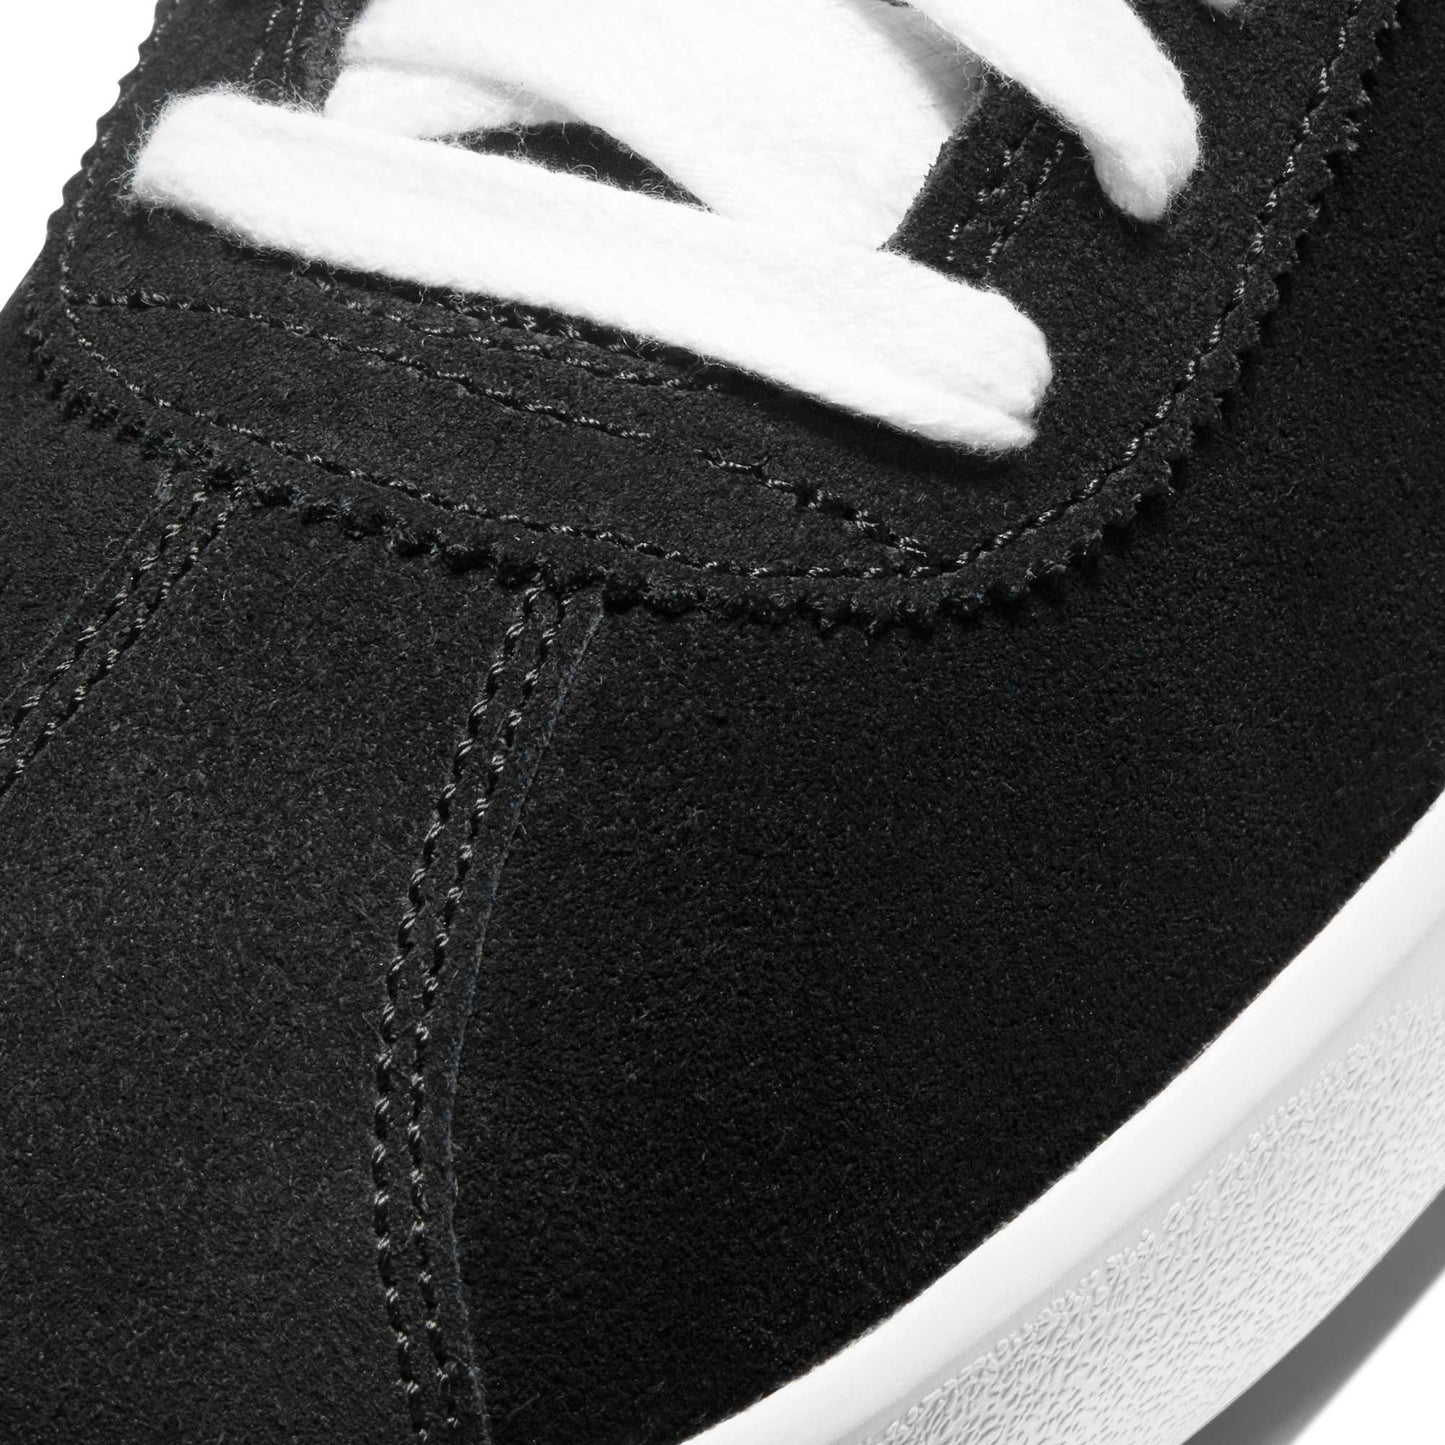 Nike SB Bruin React, black/white-black-anthracite - Tiki Room Skateboards - 9